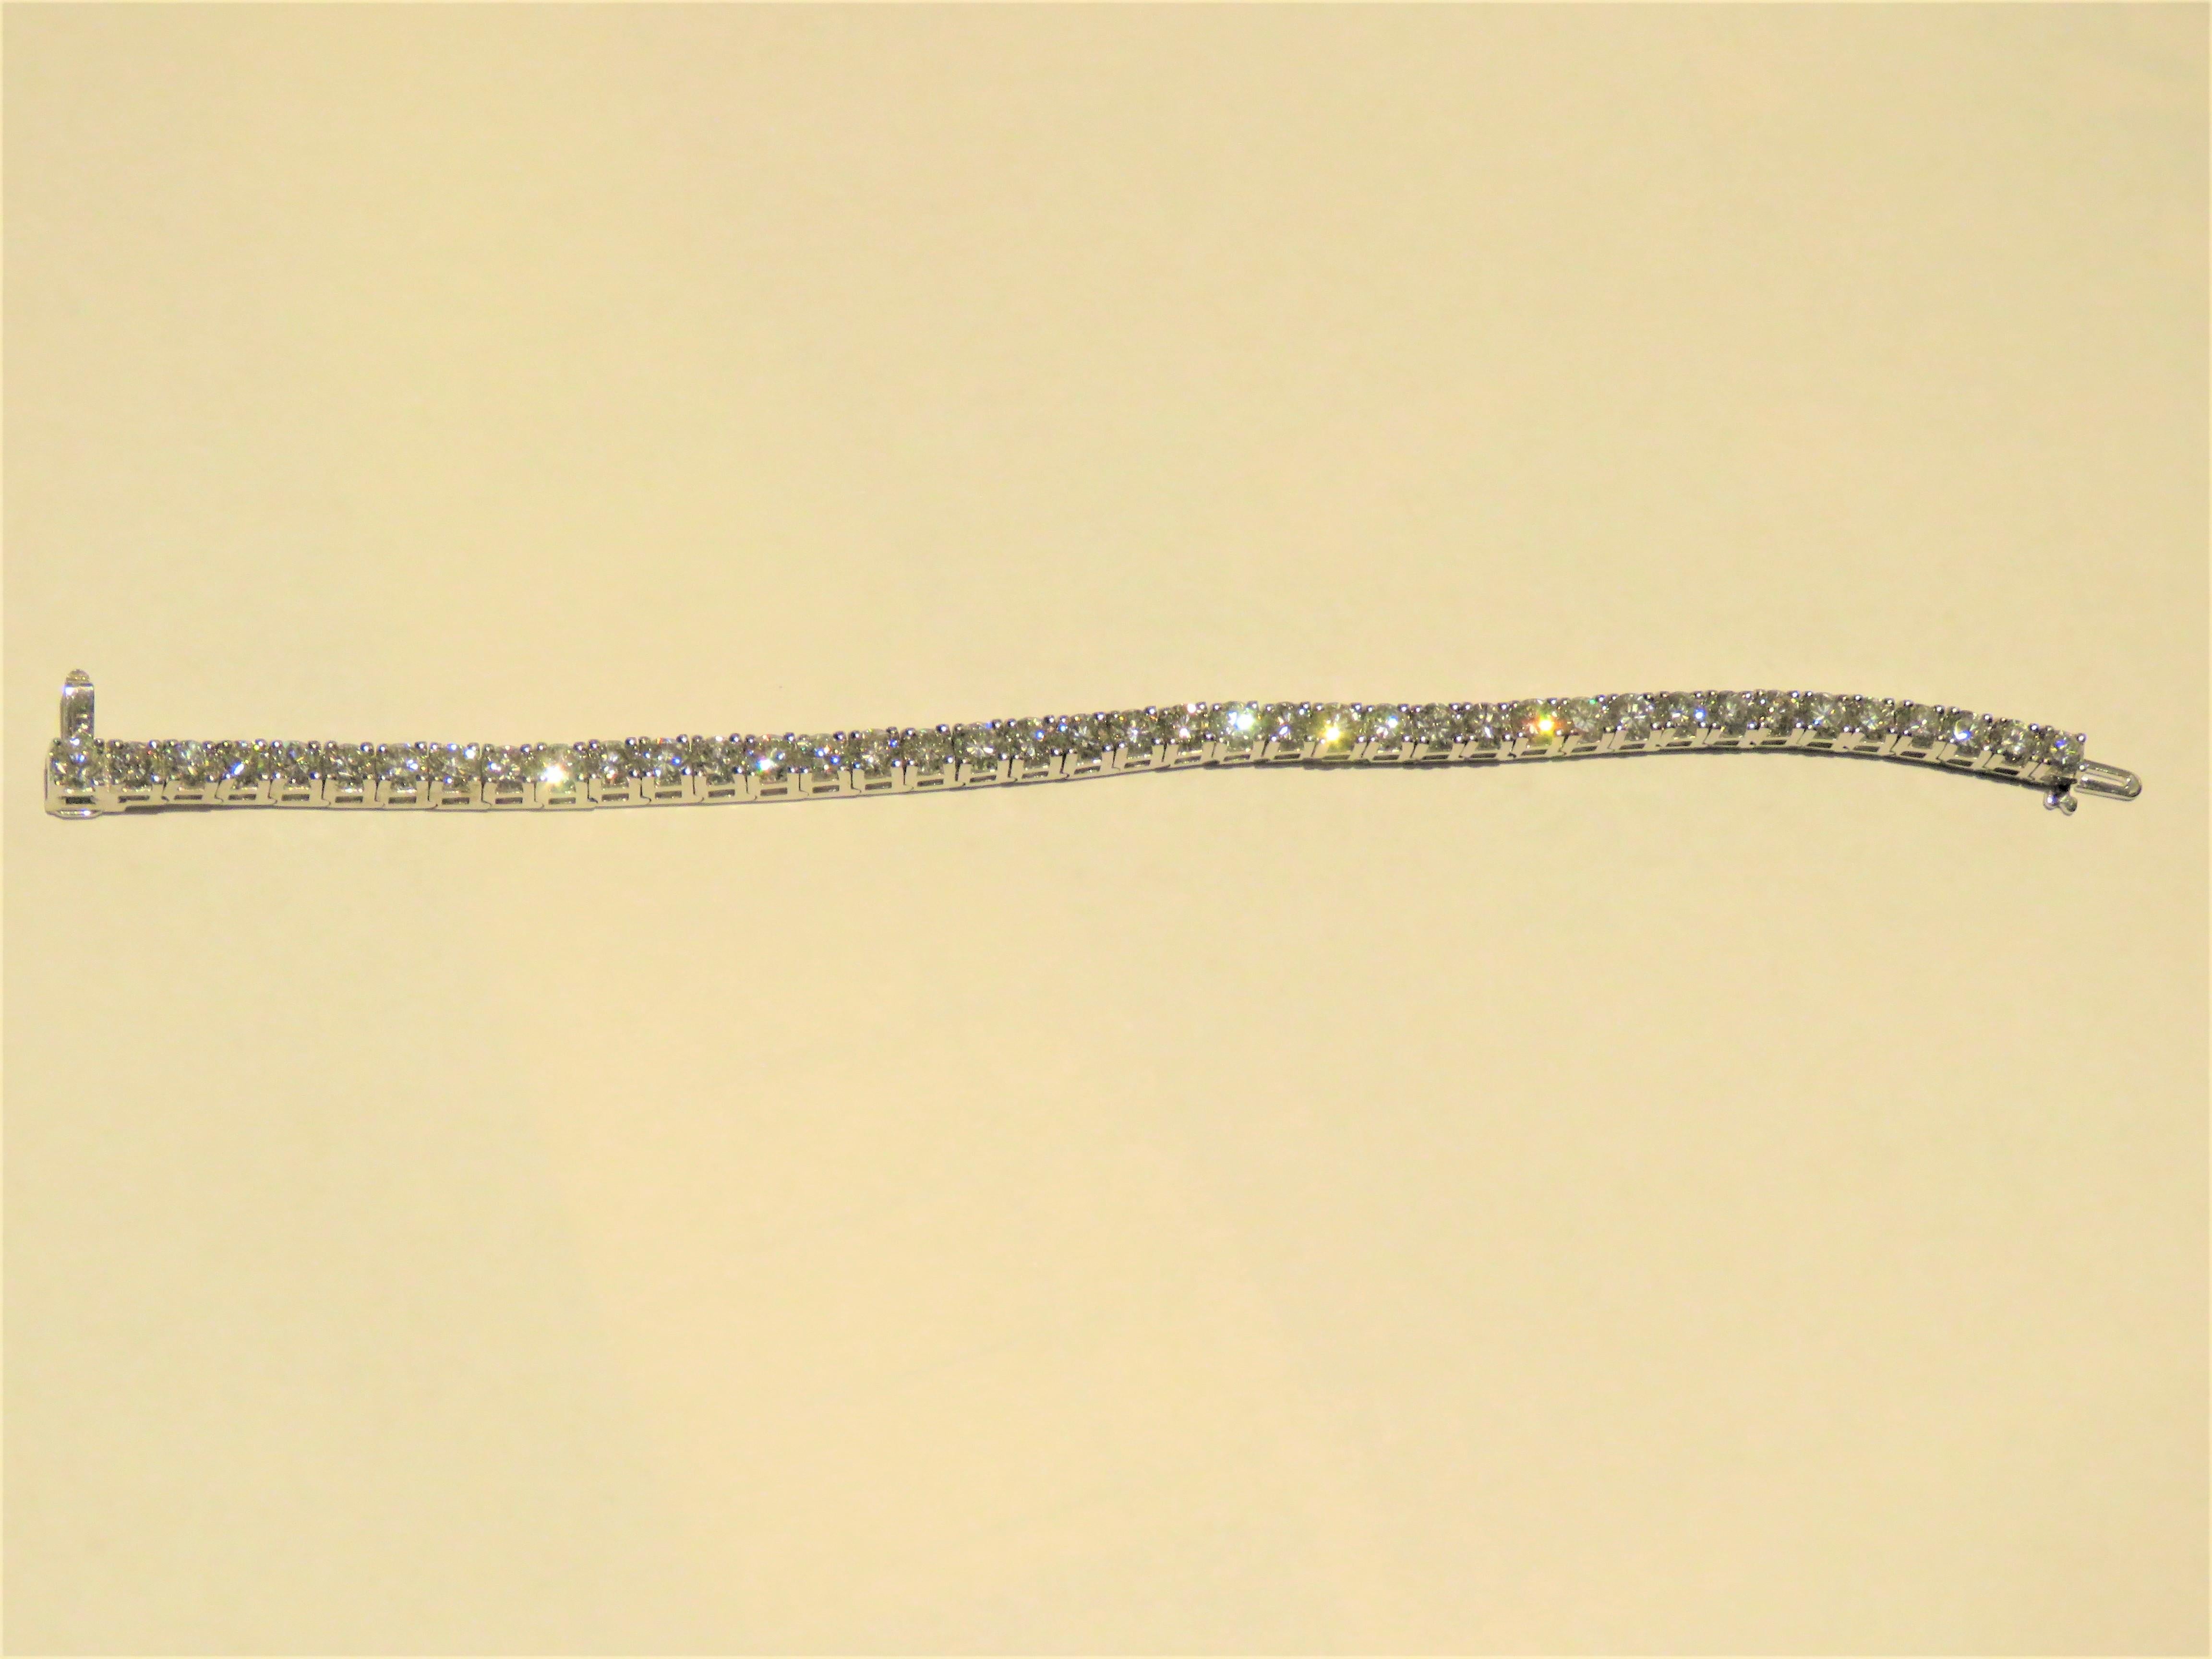 10 ct diamond tennis bracelet